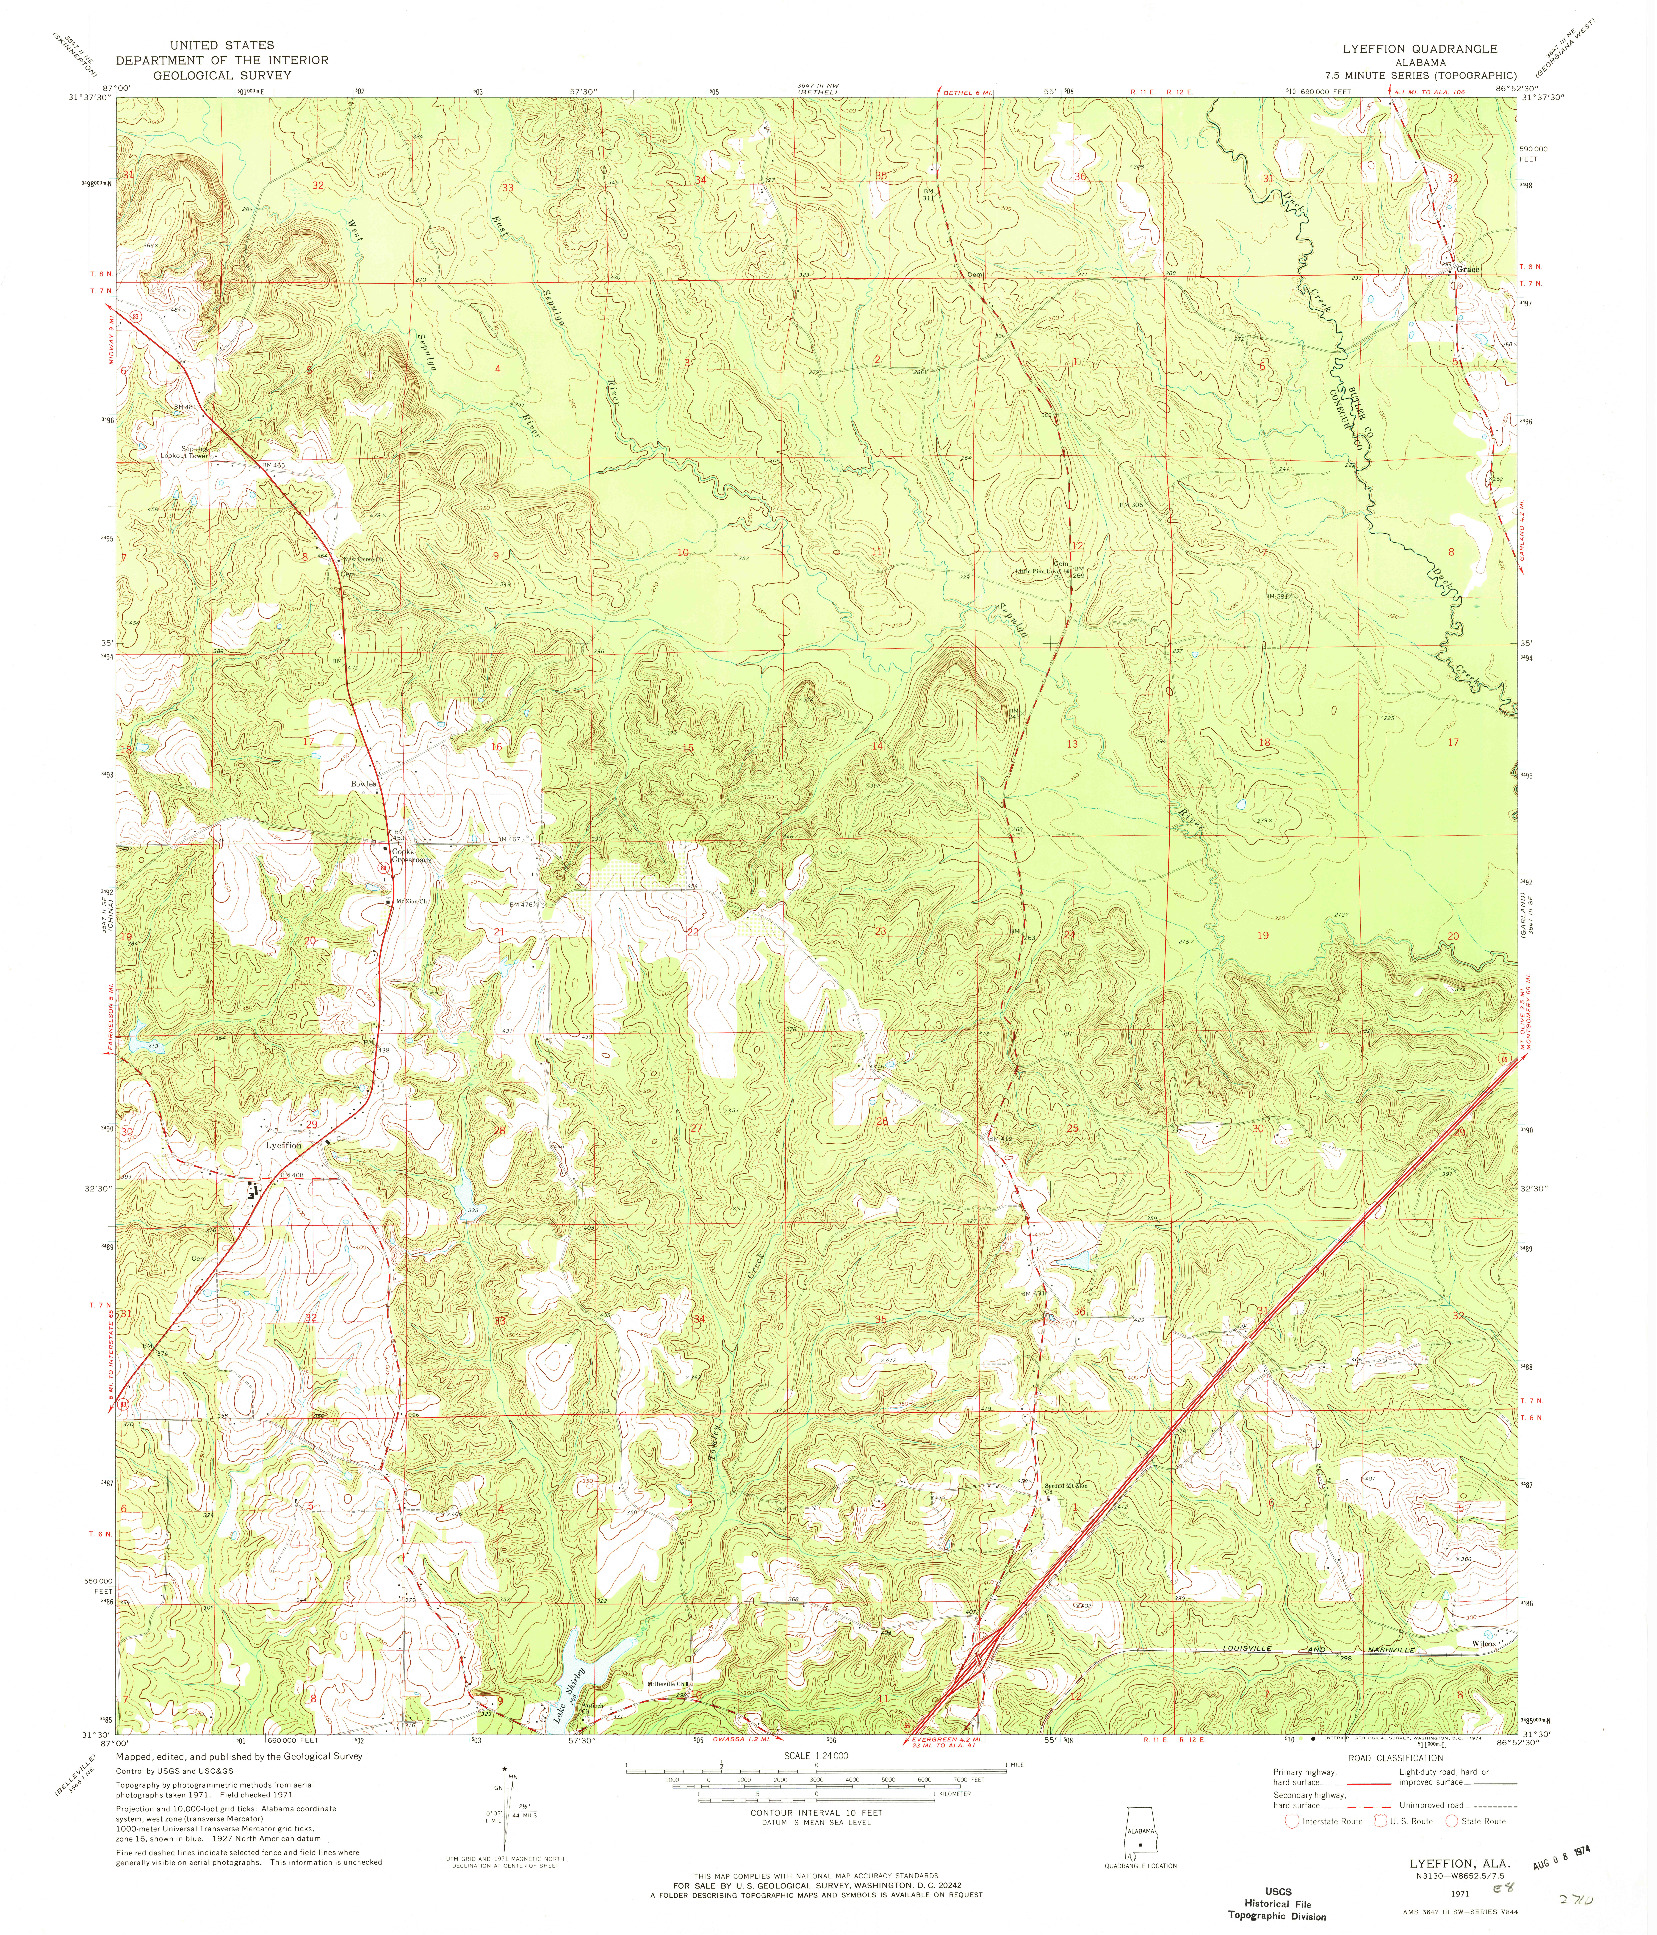 USGS 1:24000-SCALE QUADRANGLE FOR LYEFFION, AL 1971